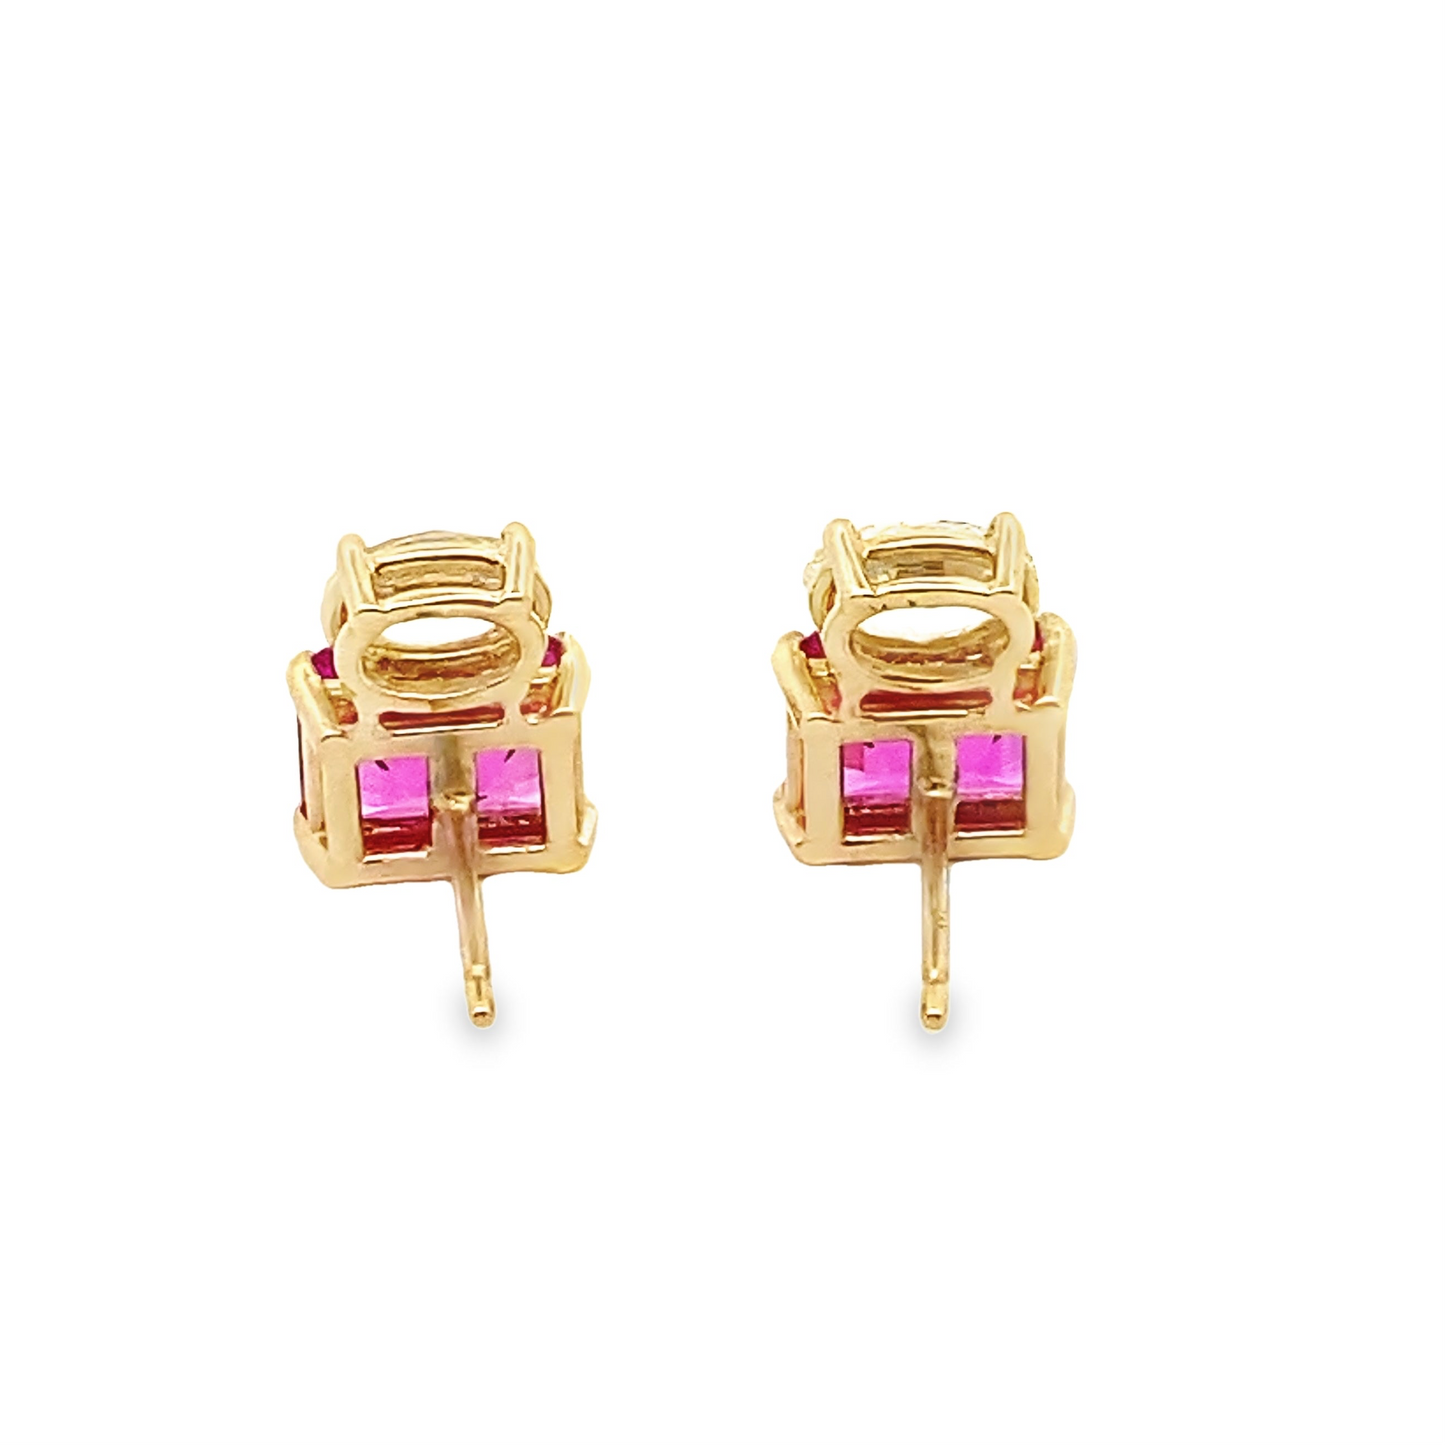 Pink Sapphire & Yellow Diamond Stud Earrings in 14K Yellow Gold